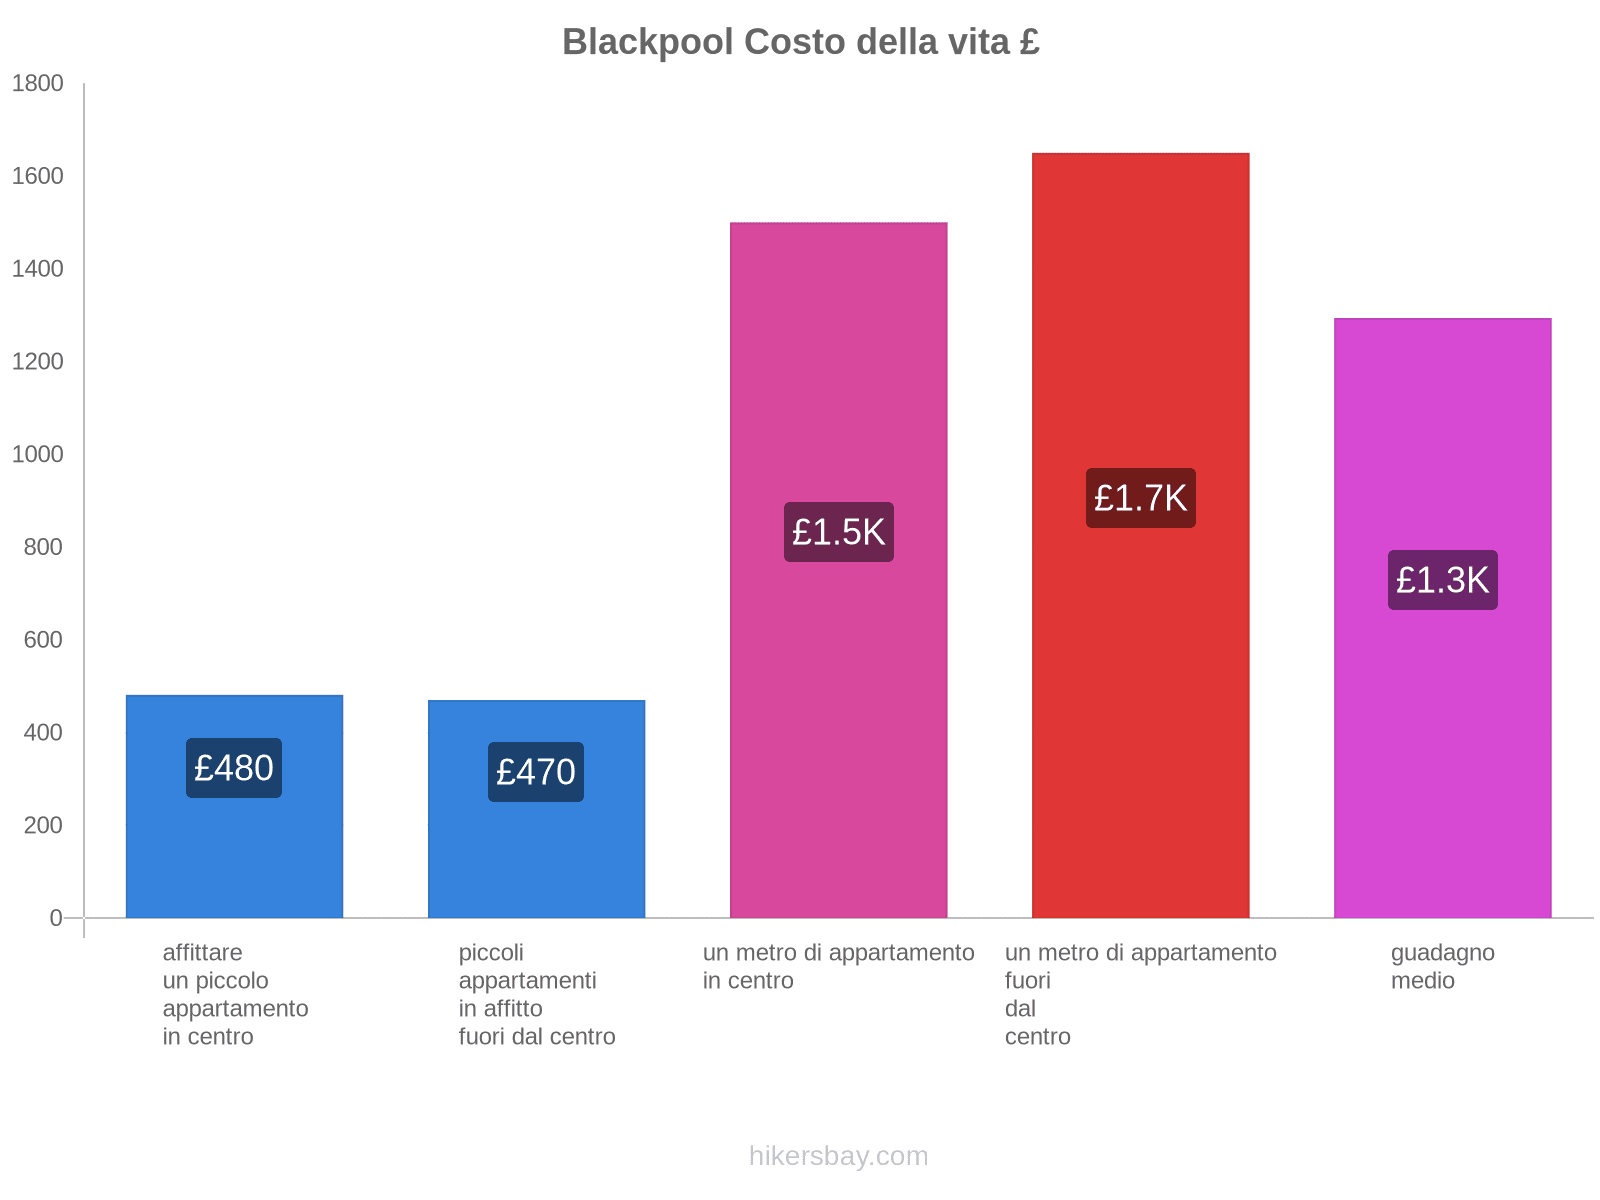 Blackpool costo della vita hikersbay.com